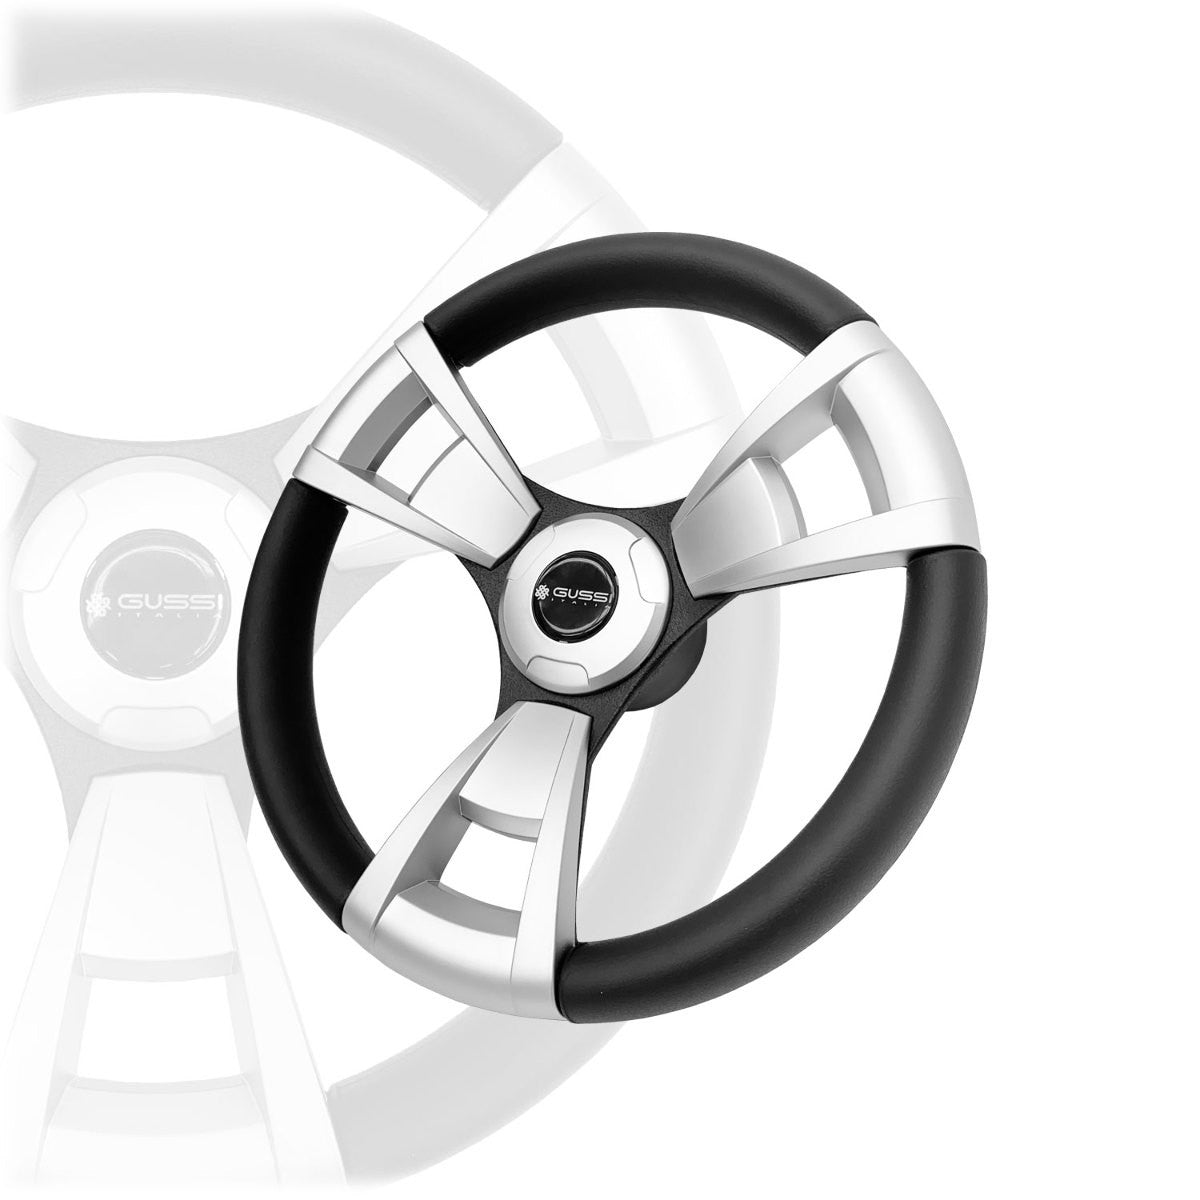 Gussi Italia Model 13 Brush/Black Steering Wheel - Full View